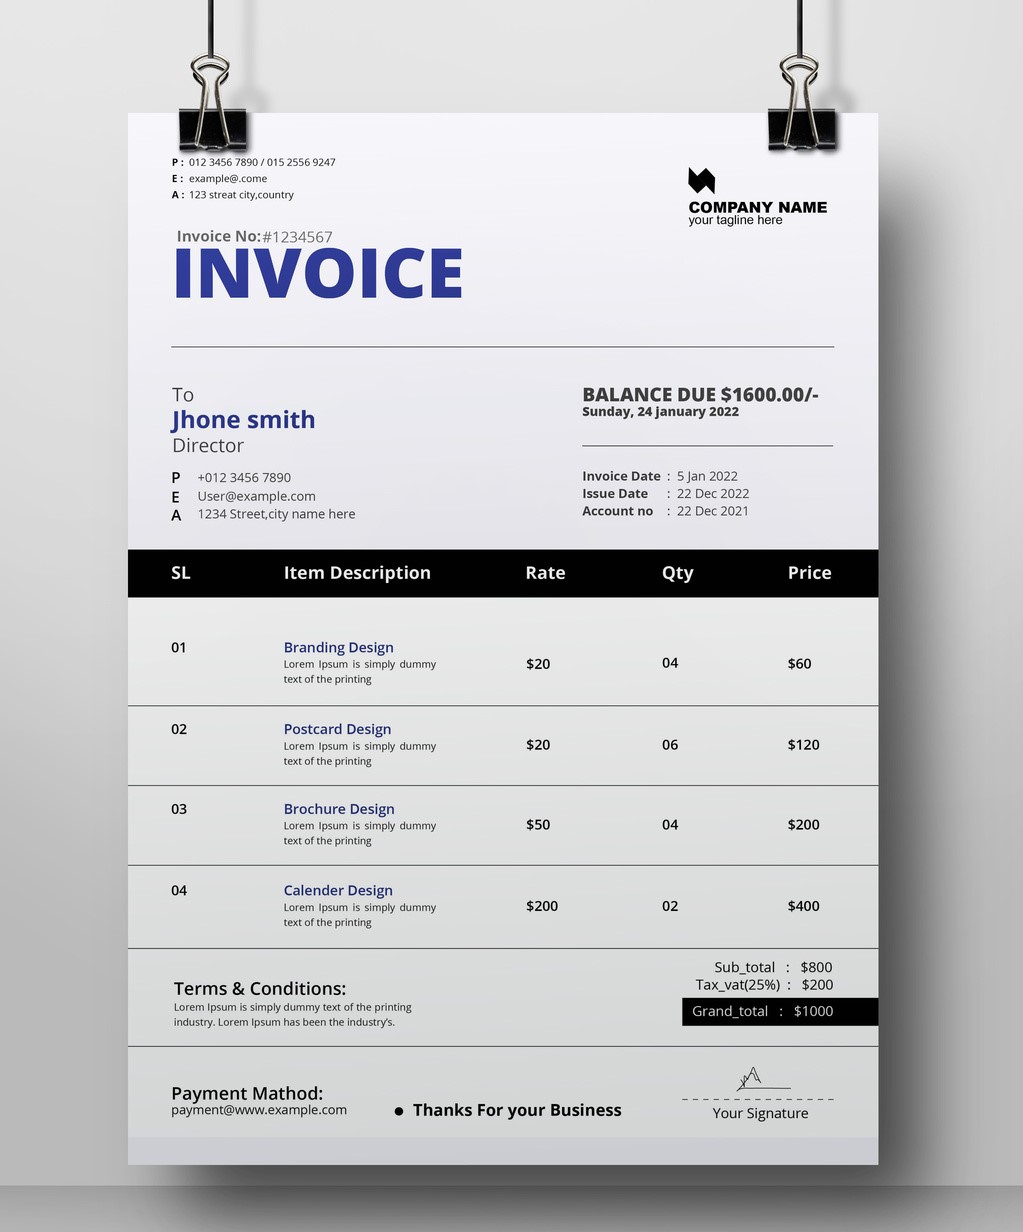 Invoice Design Layout